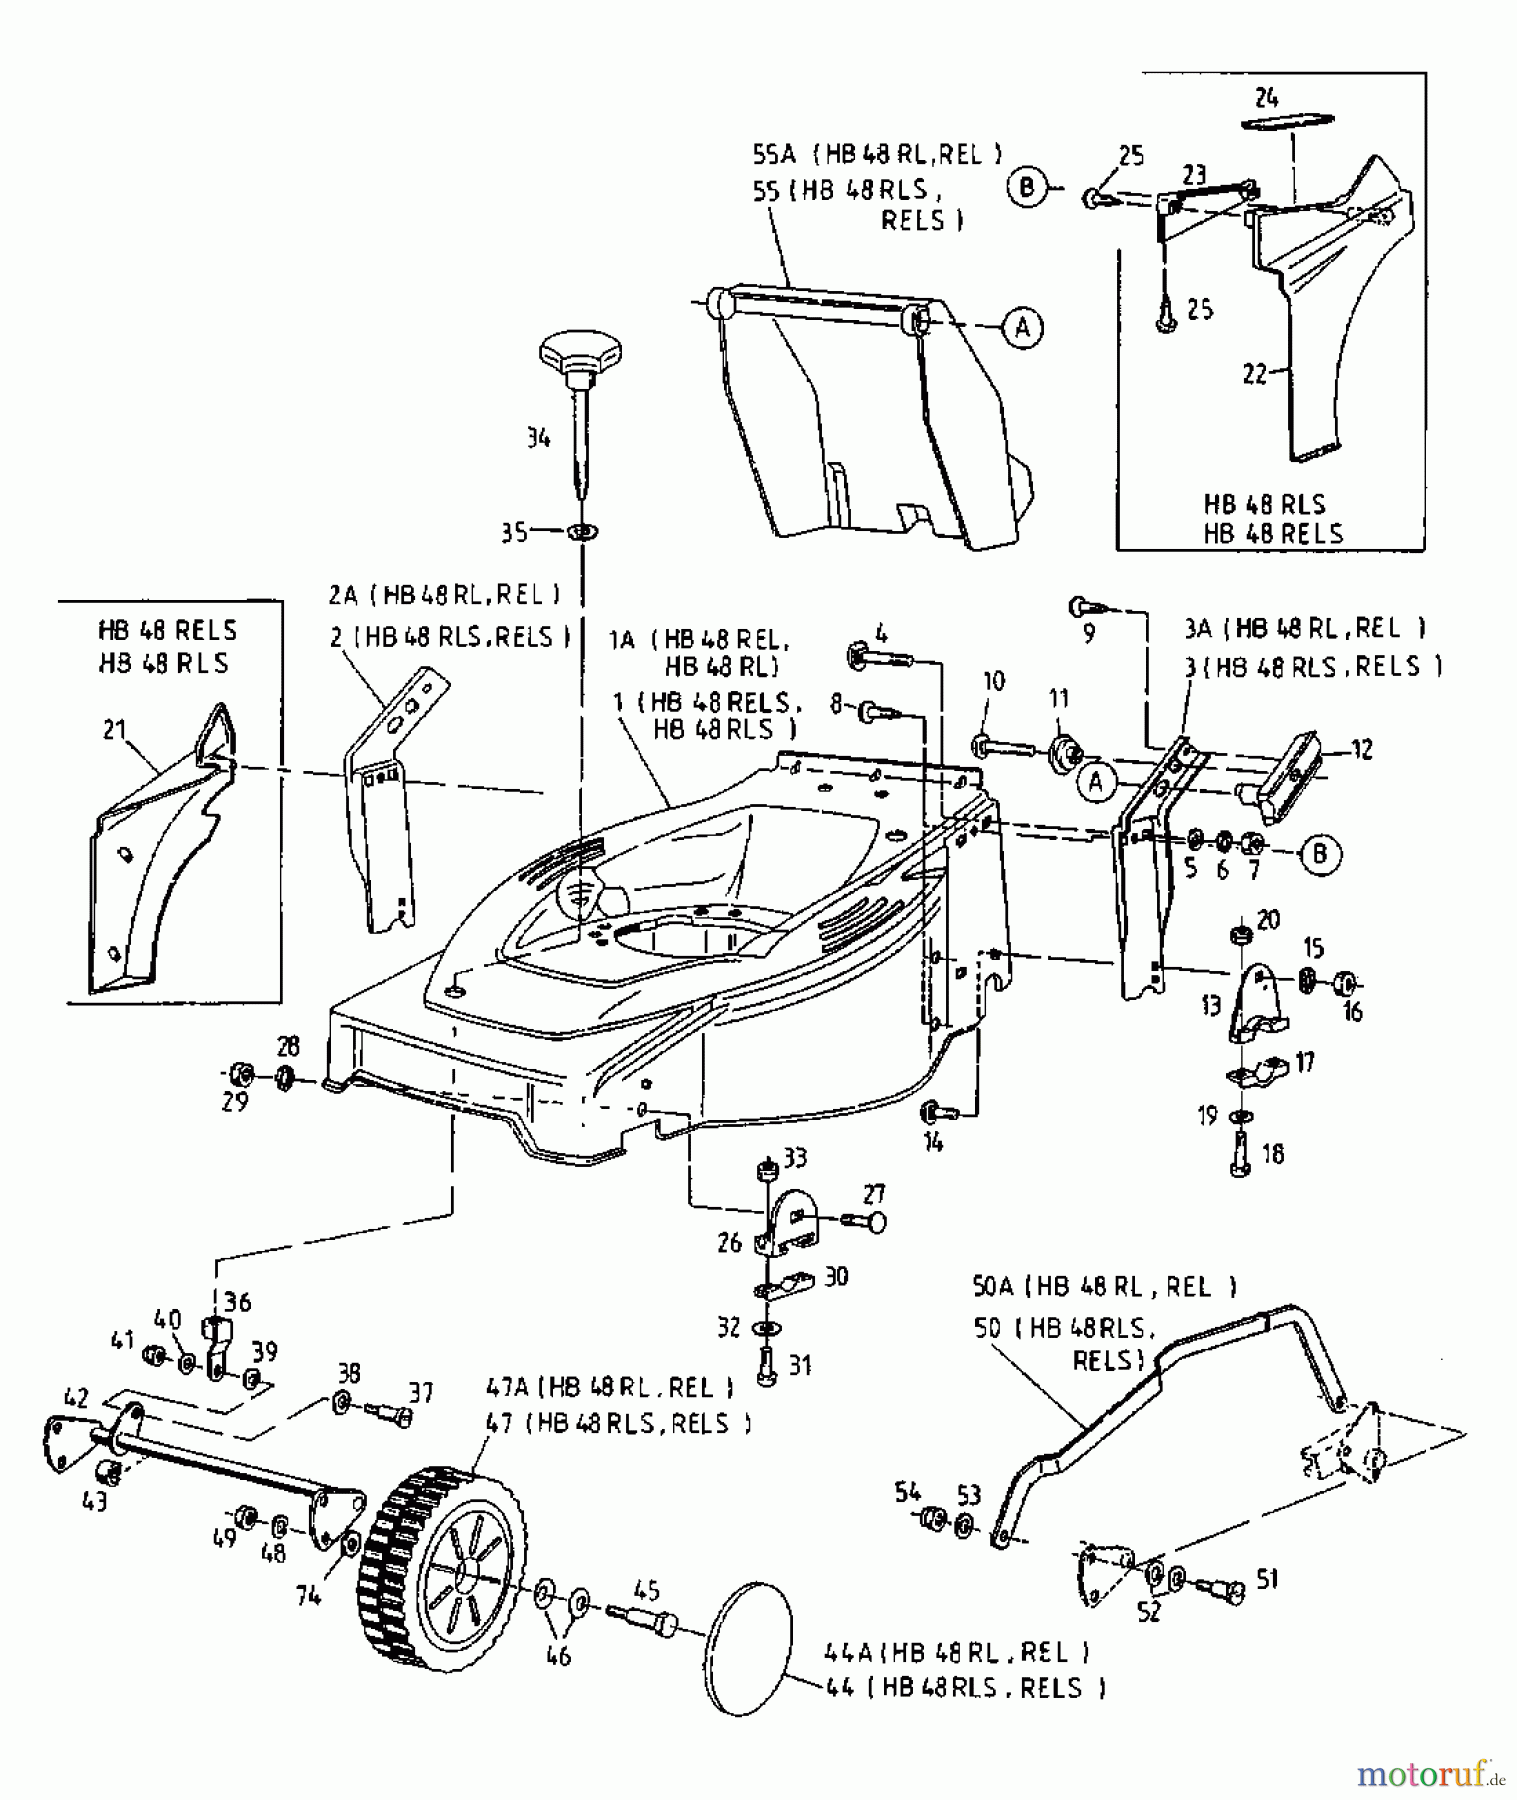  Gutbrod Petrol mower self propelled HB 48 RLS 12C-T58X690  (2000) Basic machine